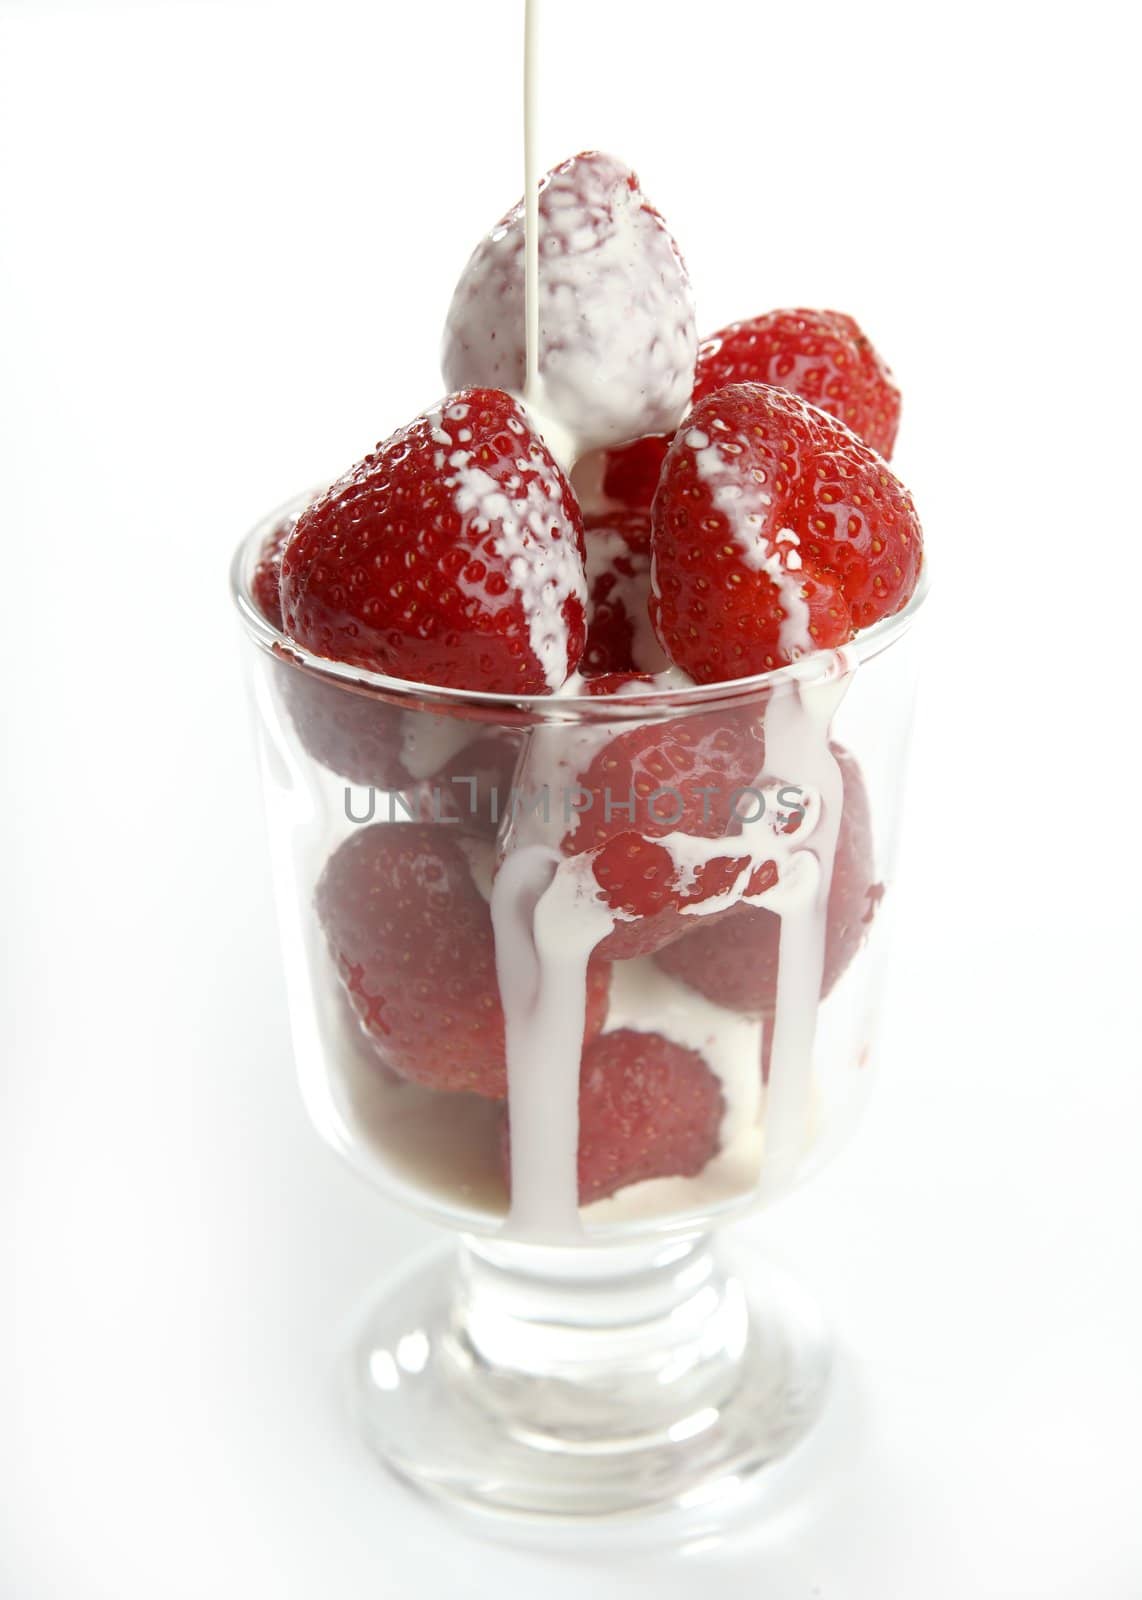 Glass with Strawberries and cream by lunamarina